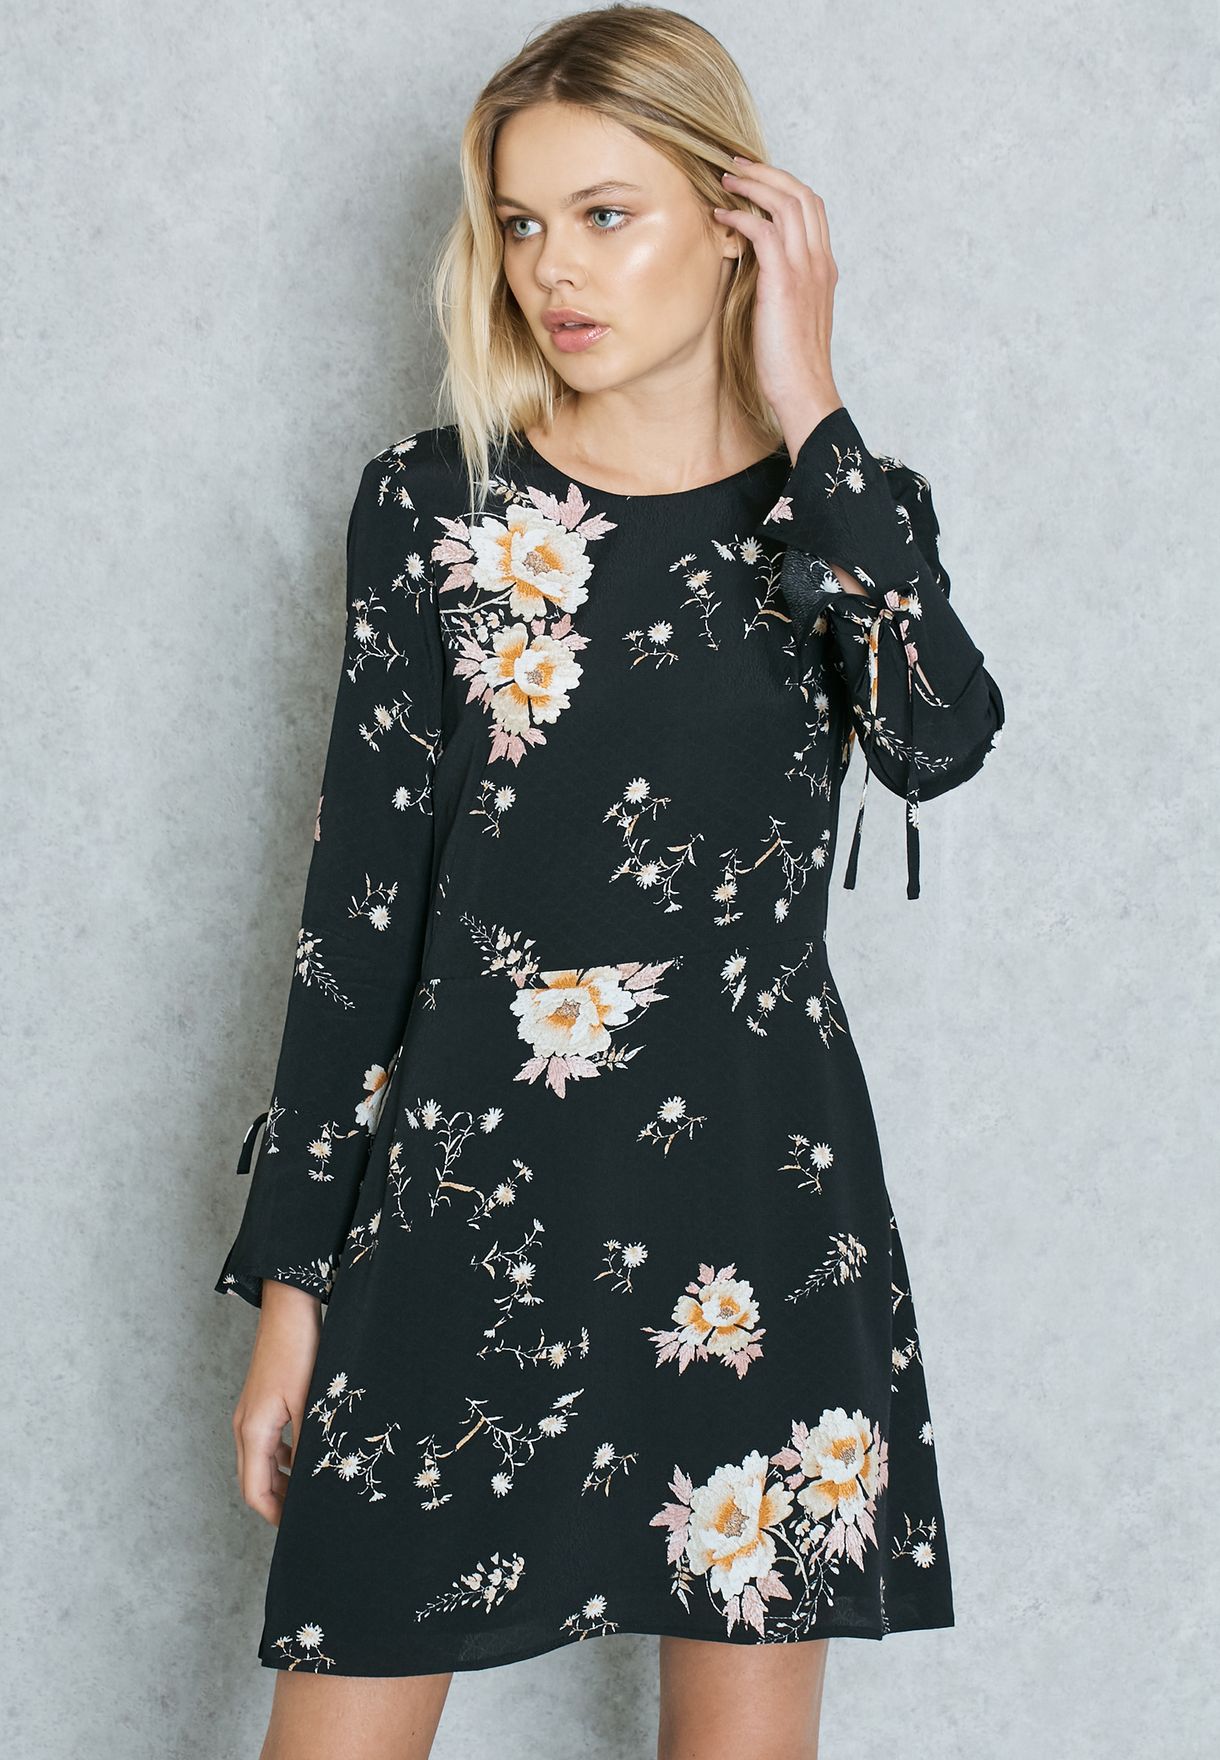 mango black floral dress